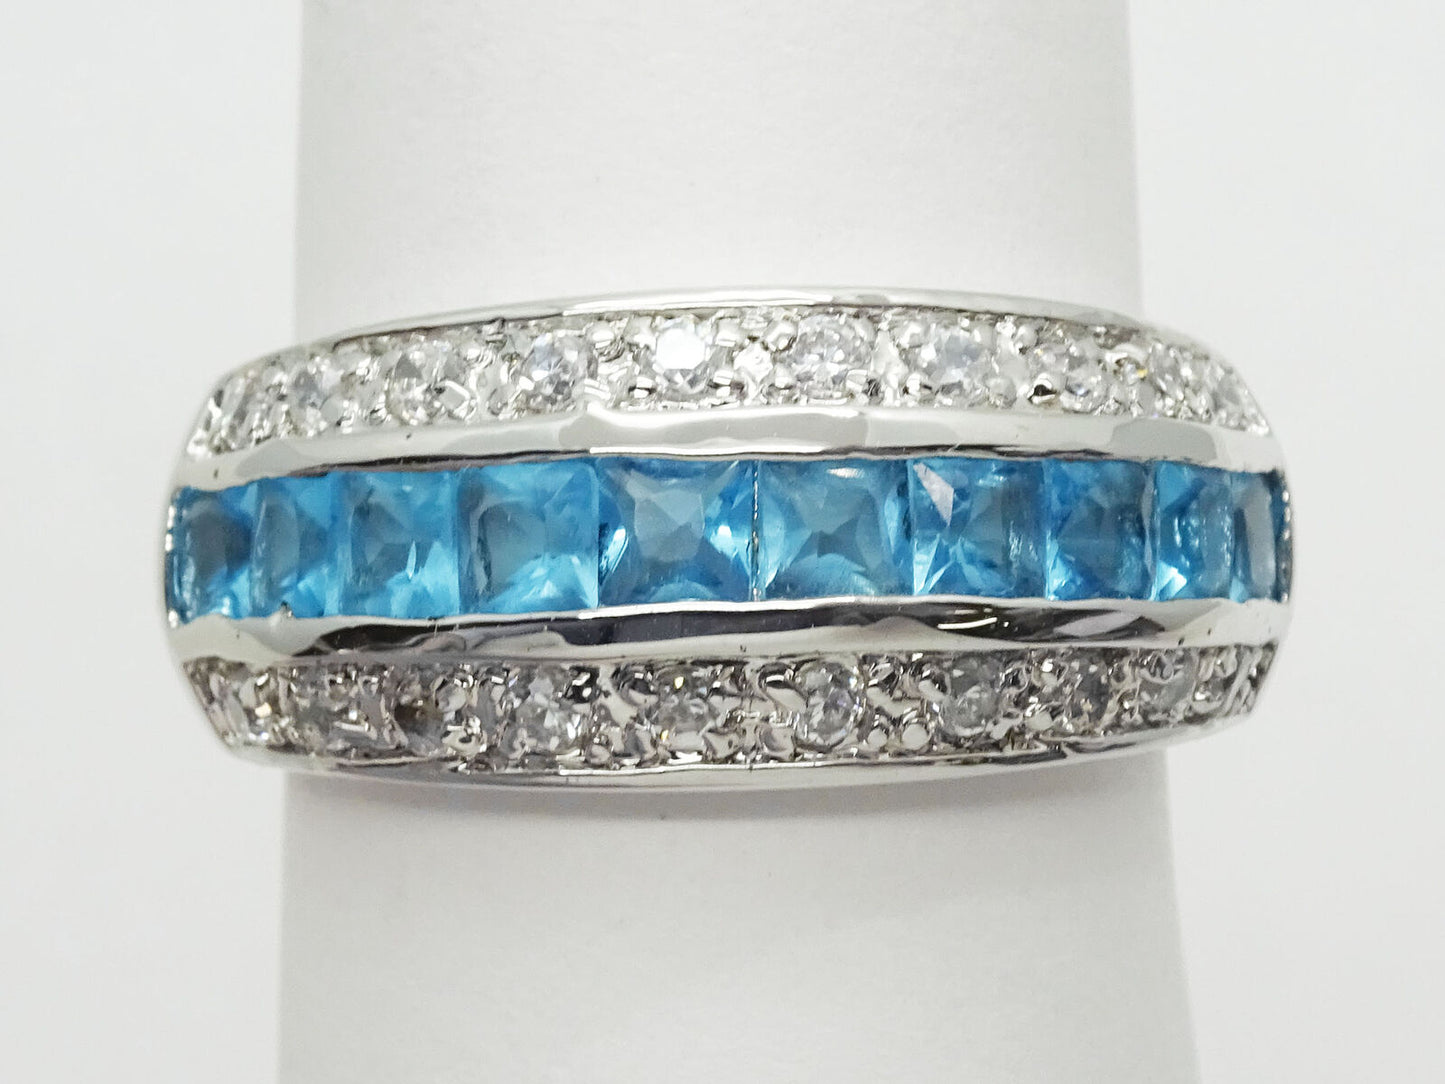 Princess Faux Blue Topaz & CZ 3-Row Band Ring, Size 10